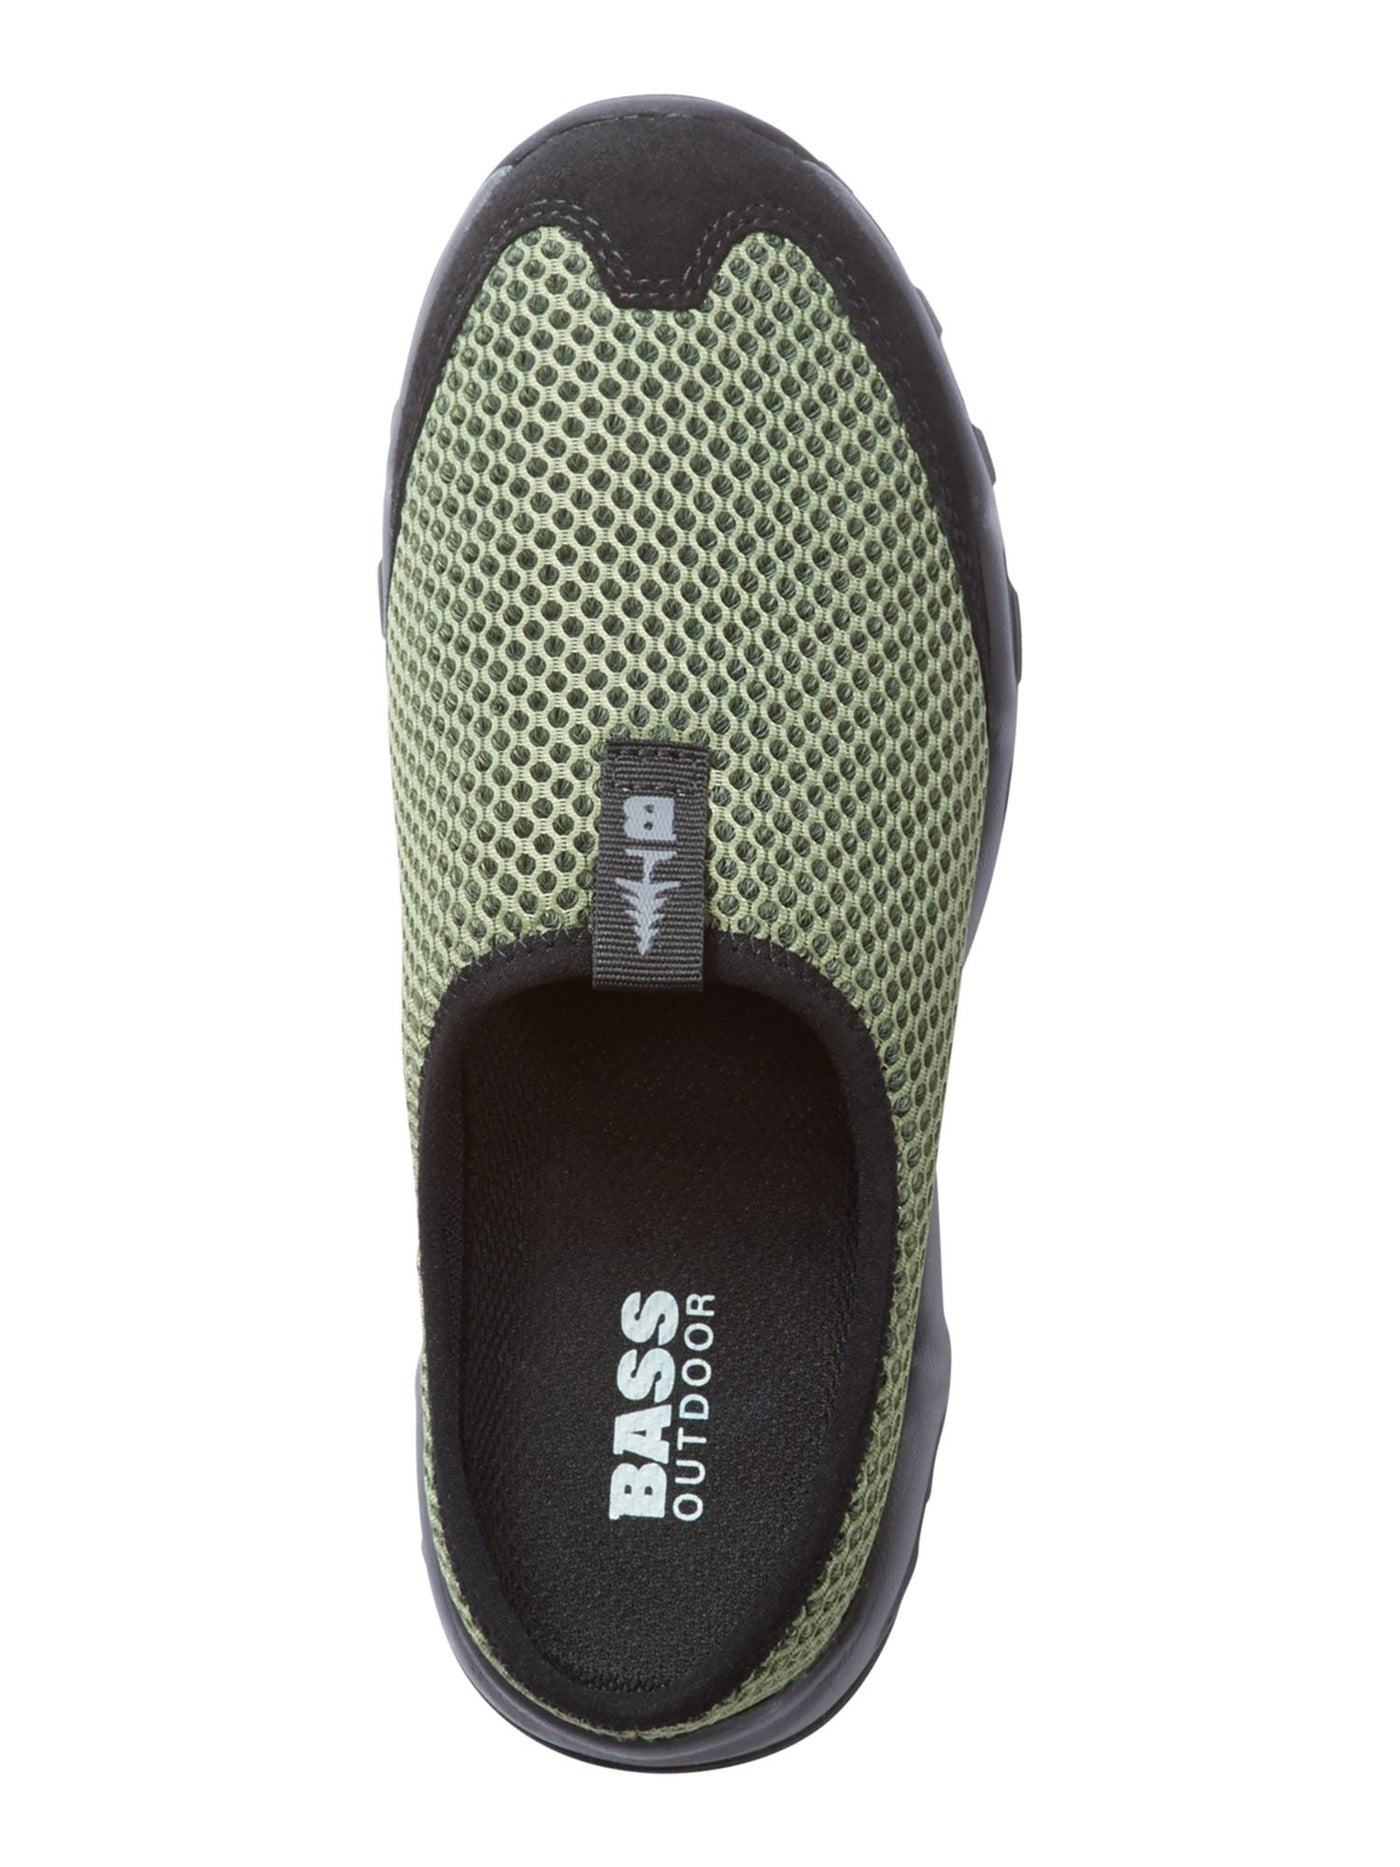 BASS OUTDOOR Womens Green Mixed Media Pull-Tab Cushioned Slip Resistant Aqua Round Toe Slip On Mules 8.5 M